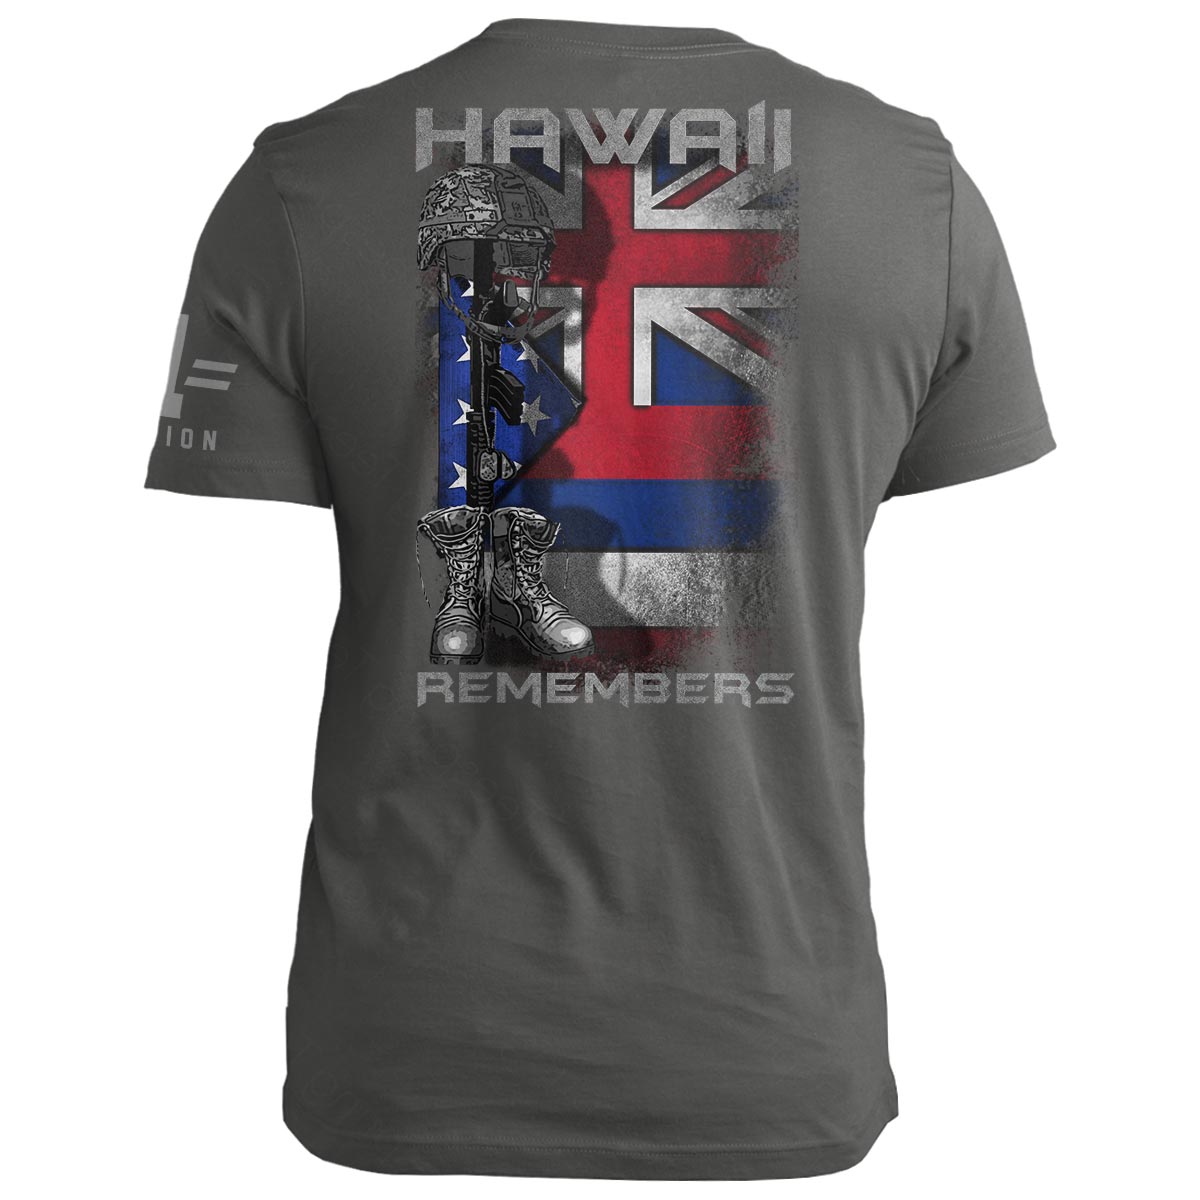 Hawaii Remembers